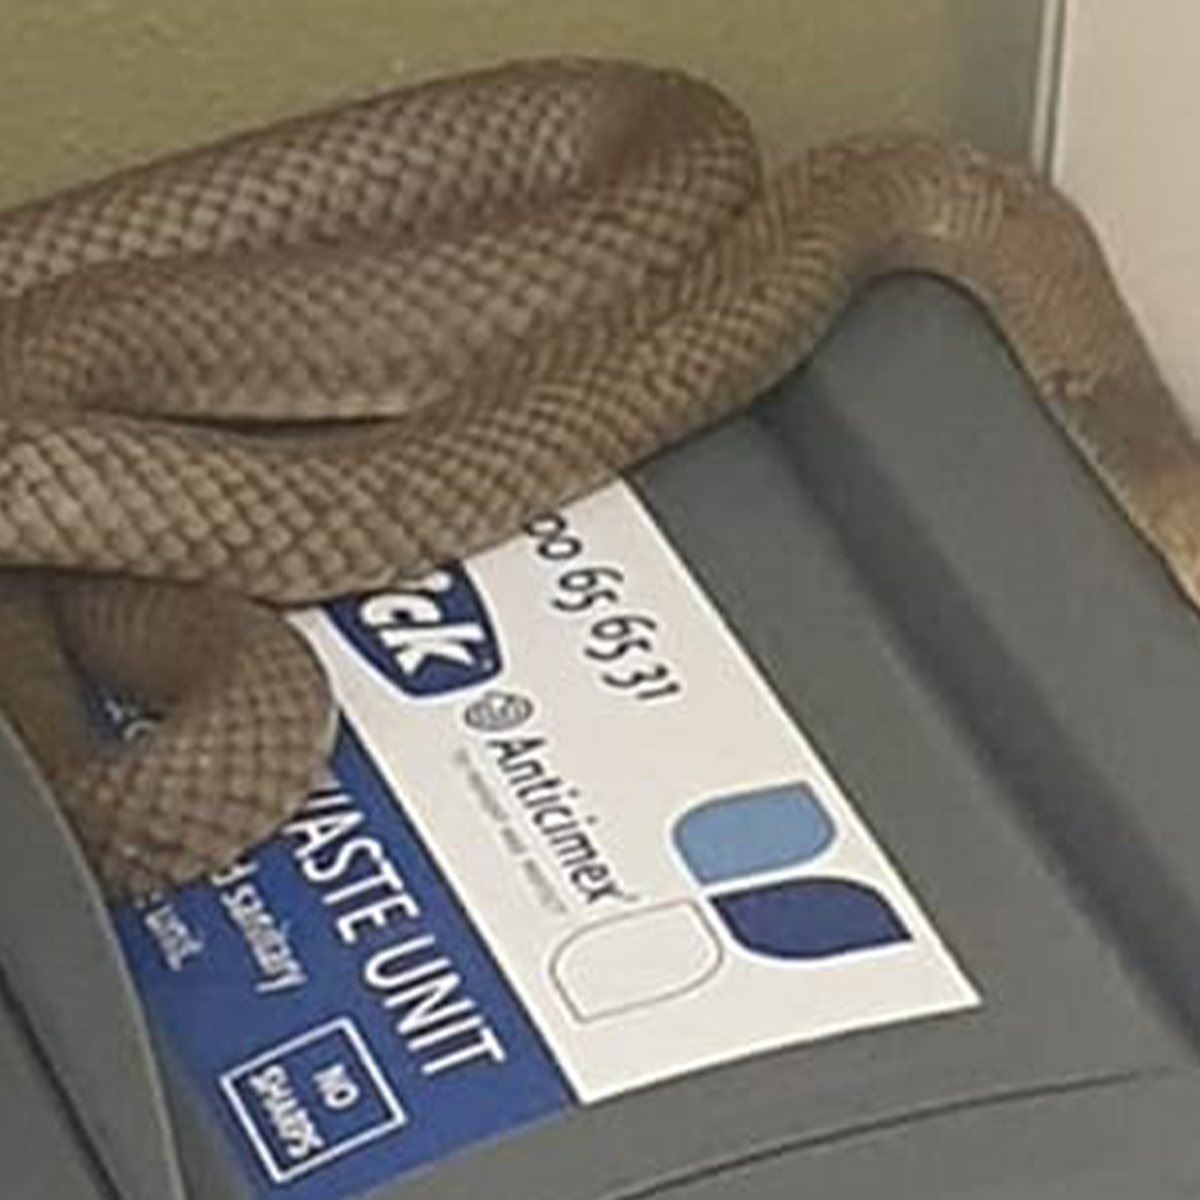 Thirsty snakes slither into Australian toilets as dry season bites